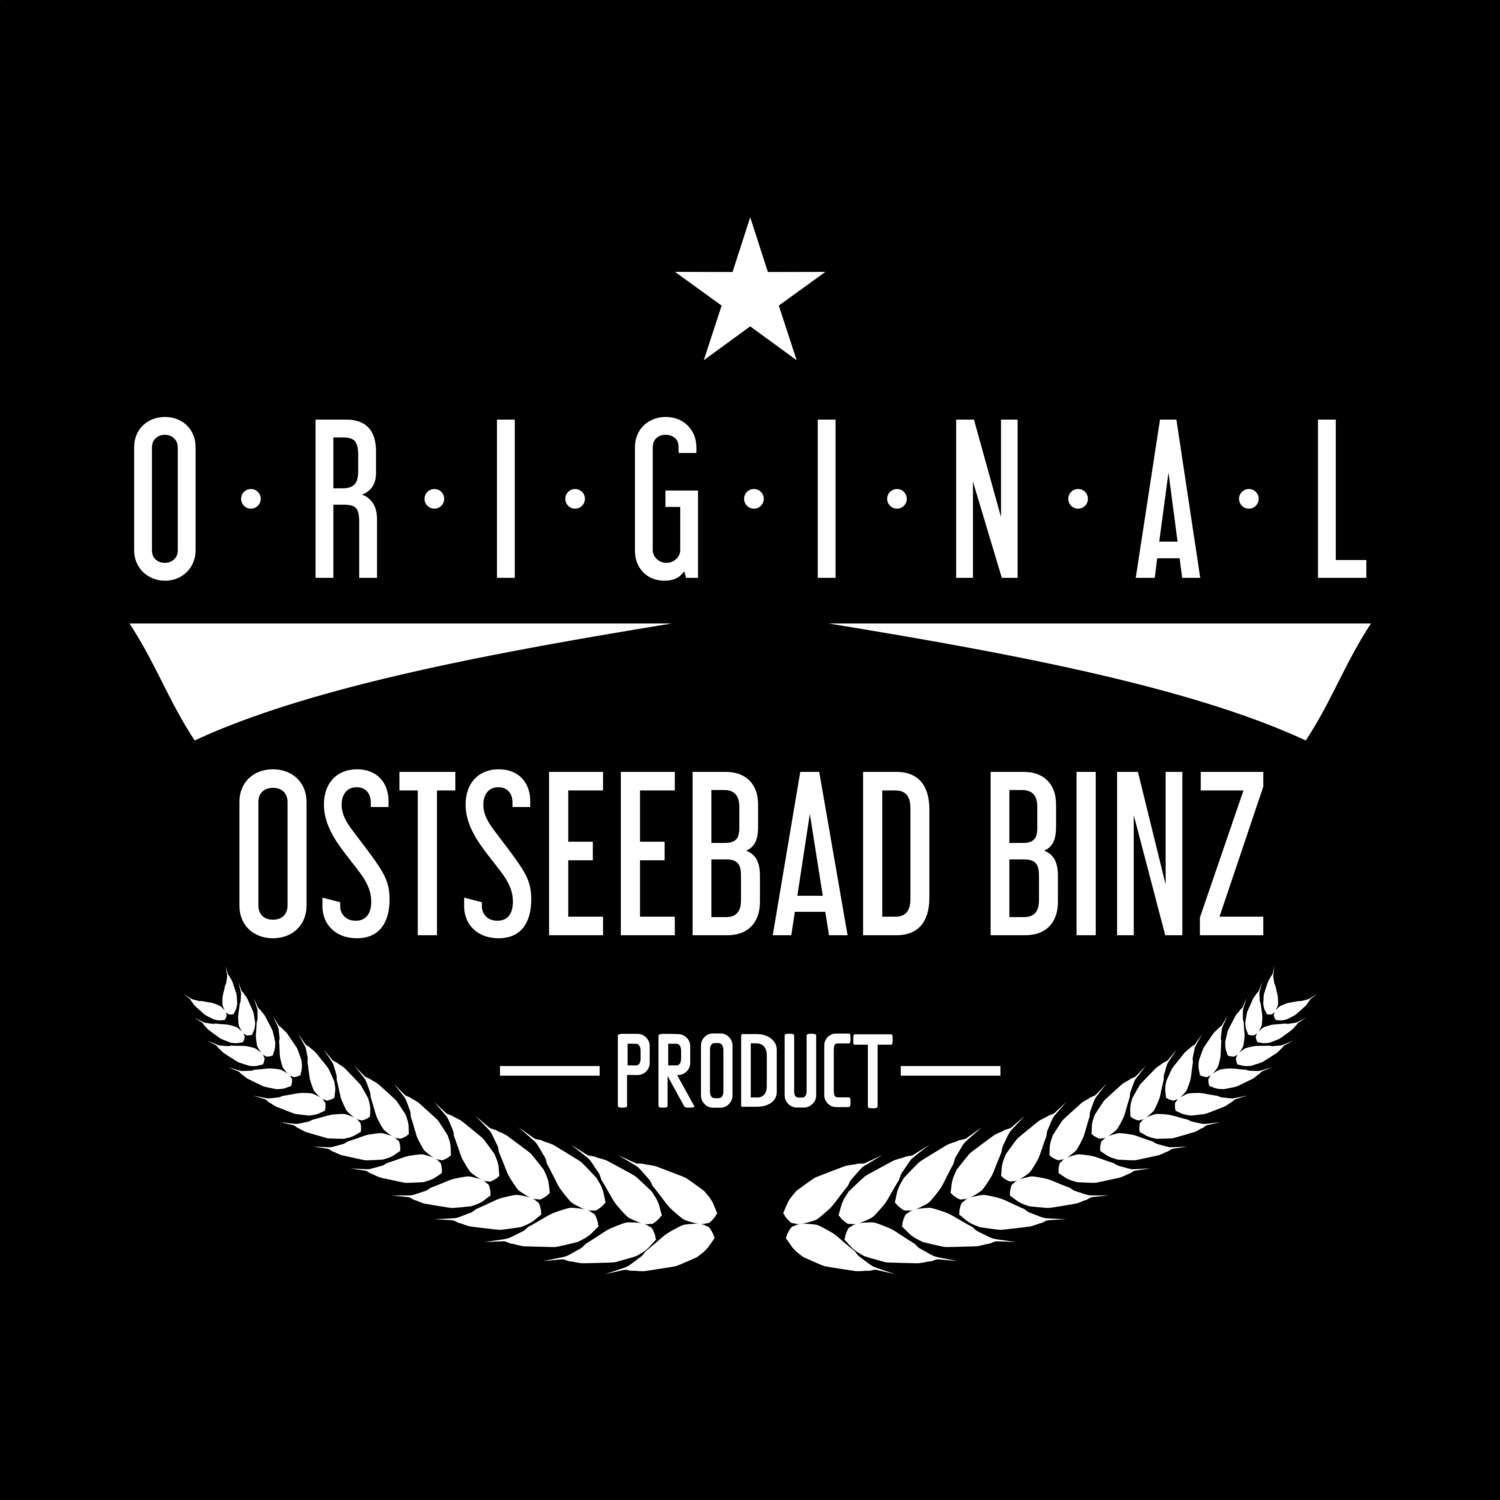 Ostseebad Binz T-Shirt »Original Product«